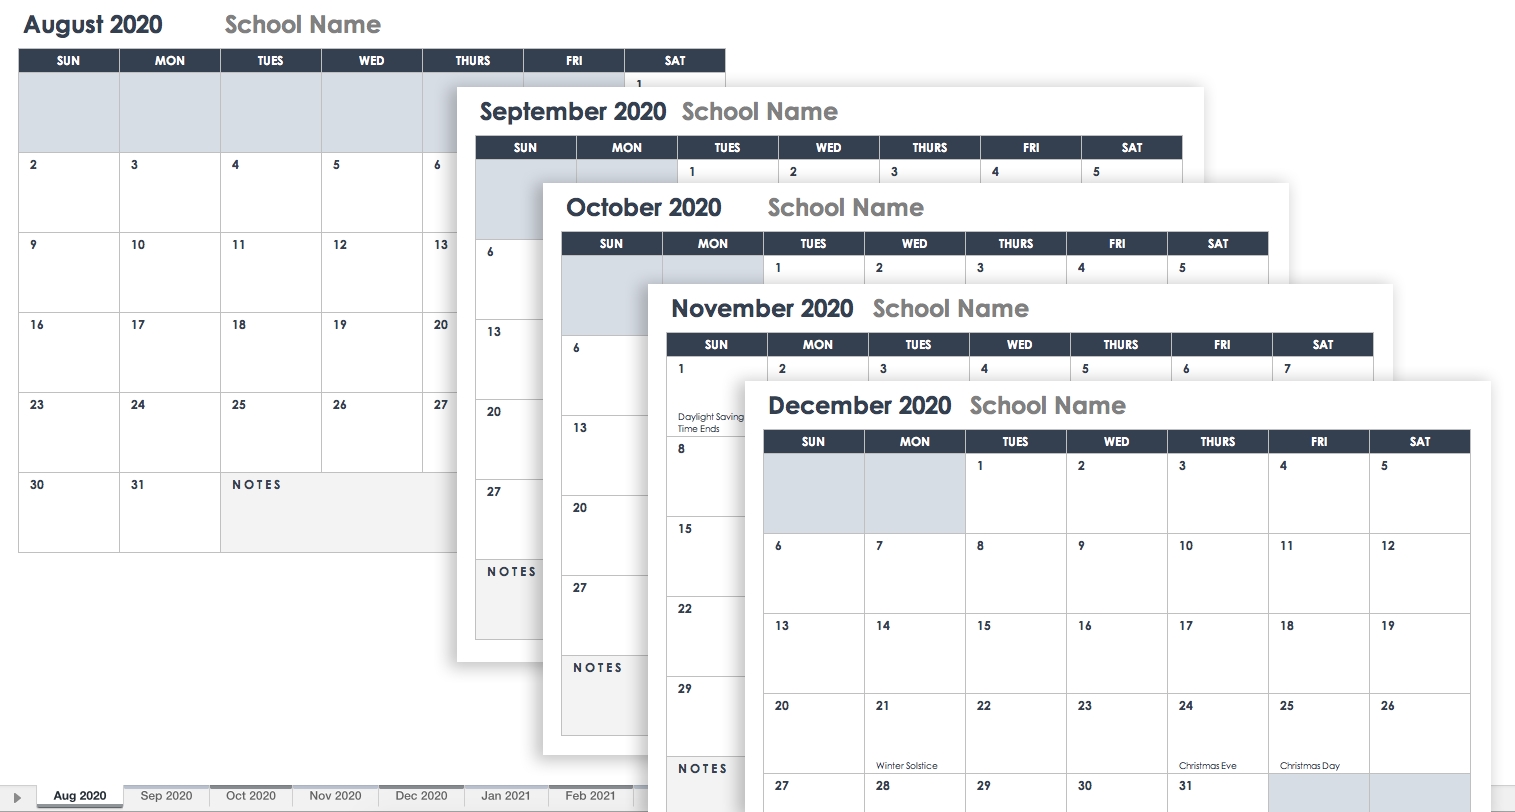 Free Blank Calendar Templates - Smartsheet Monthly Calendar No Weekends